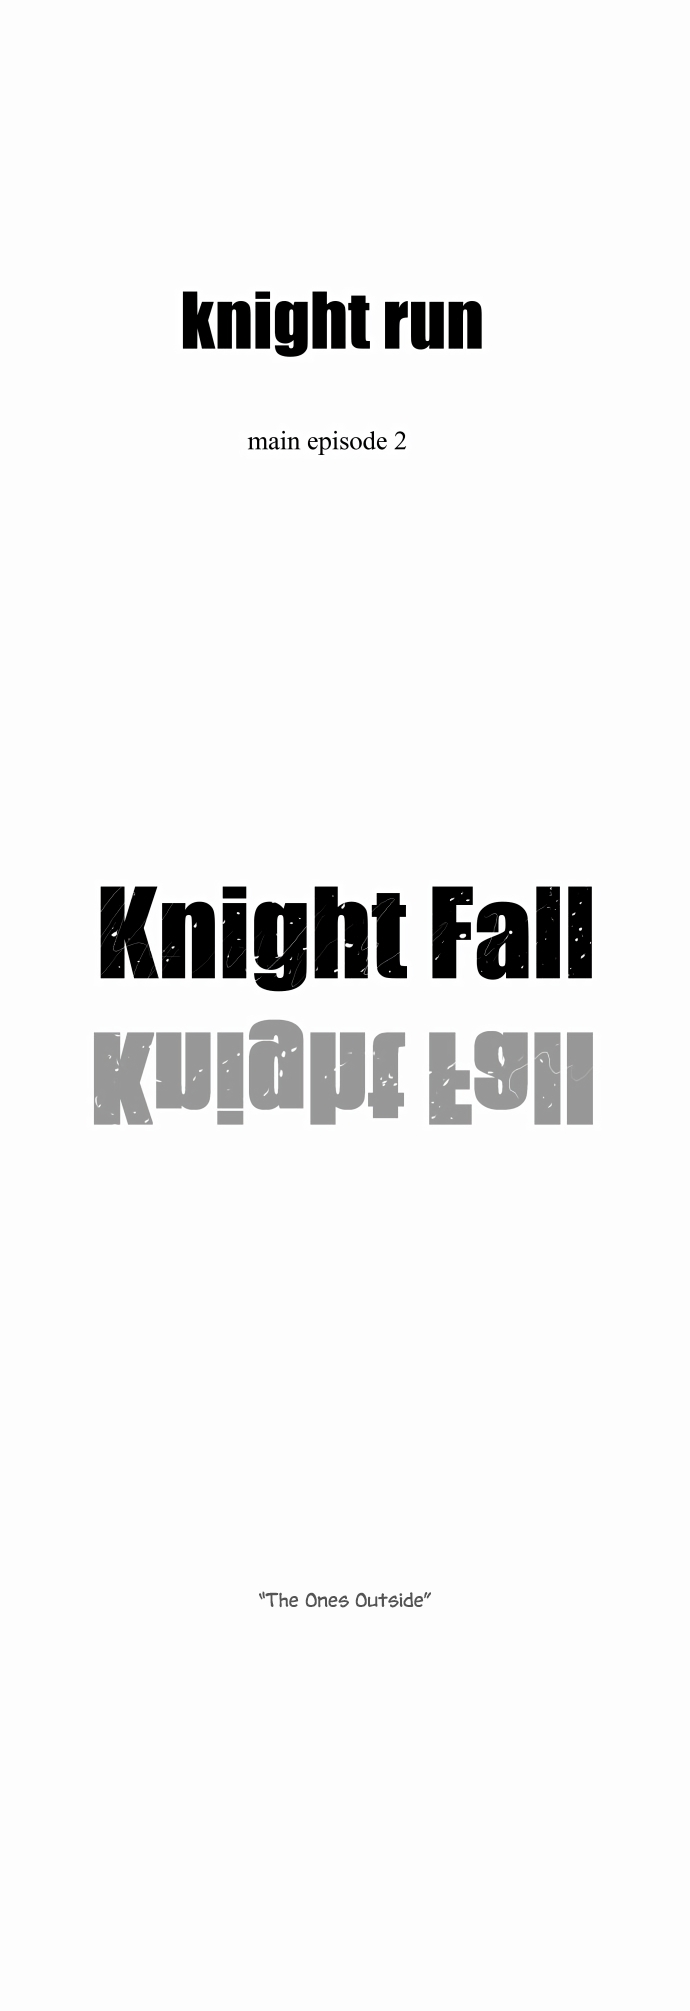 Knight Run Vol. 4 Ch. 197 Knightfall Part 1 | The ones outside